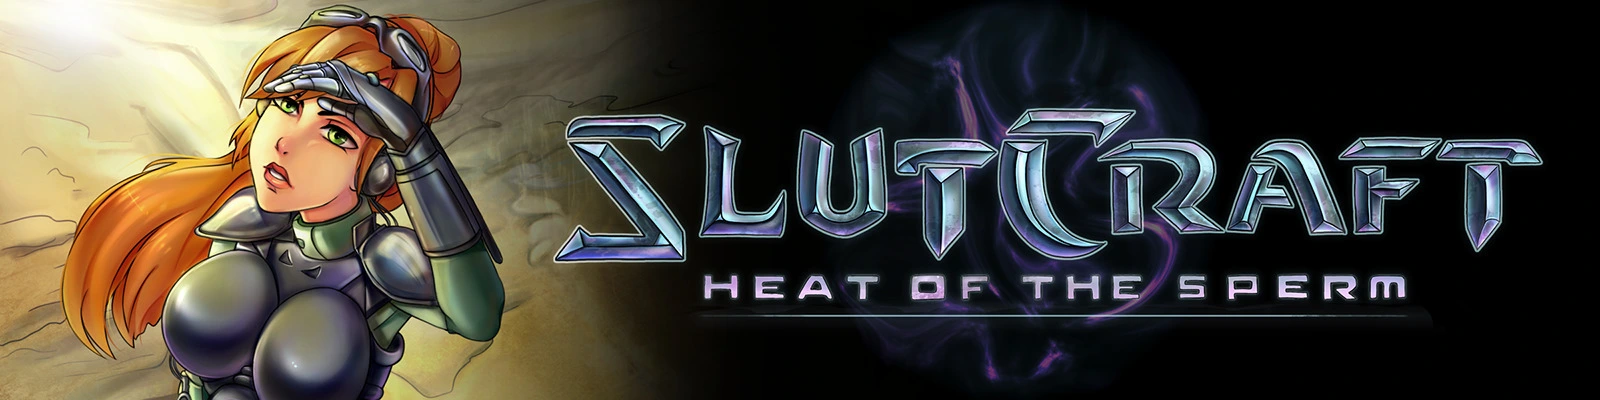 SlutCraft: Heat of the Sperm [v0.19.1] main image